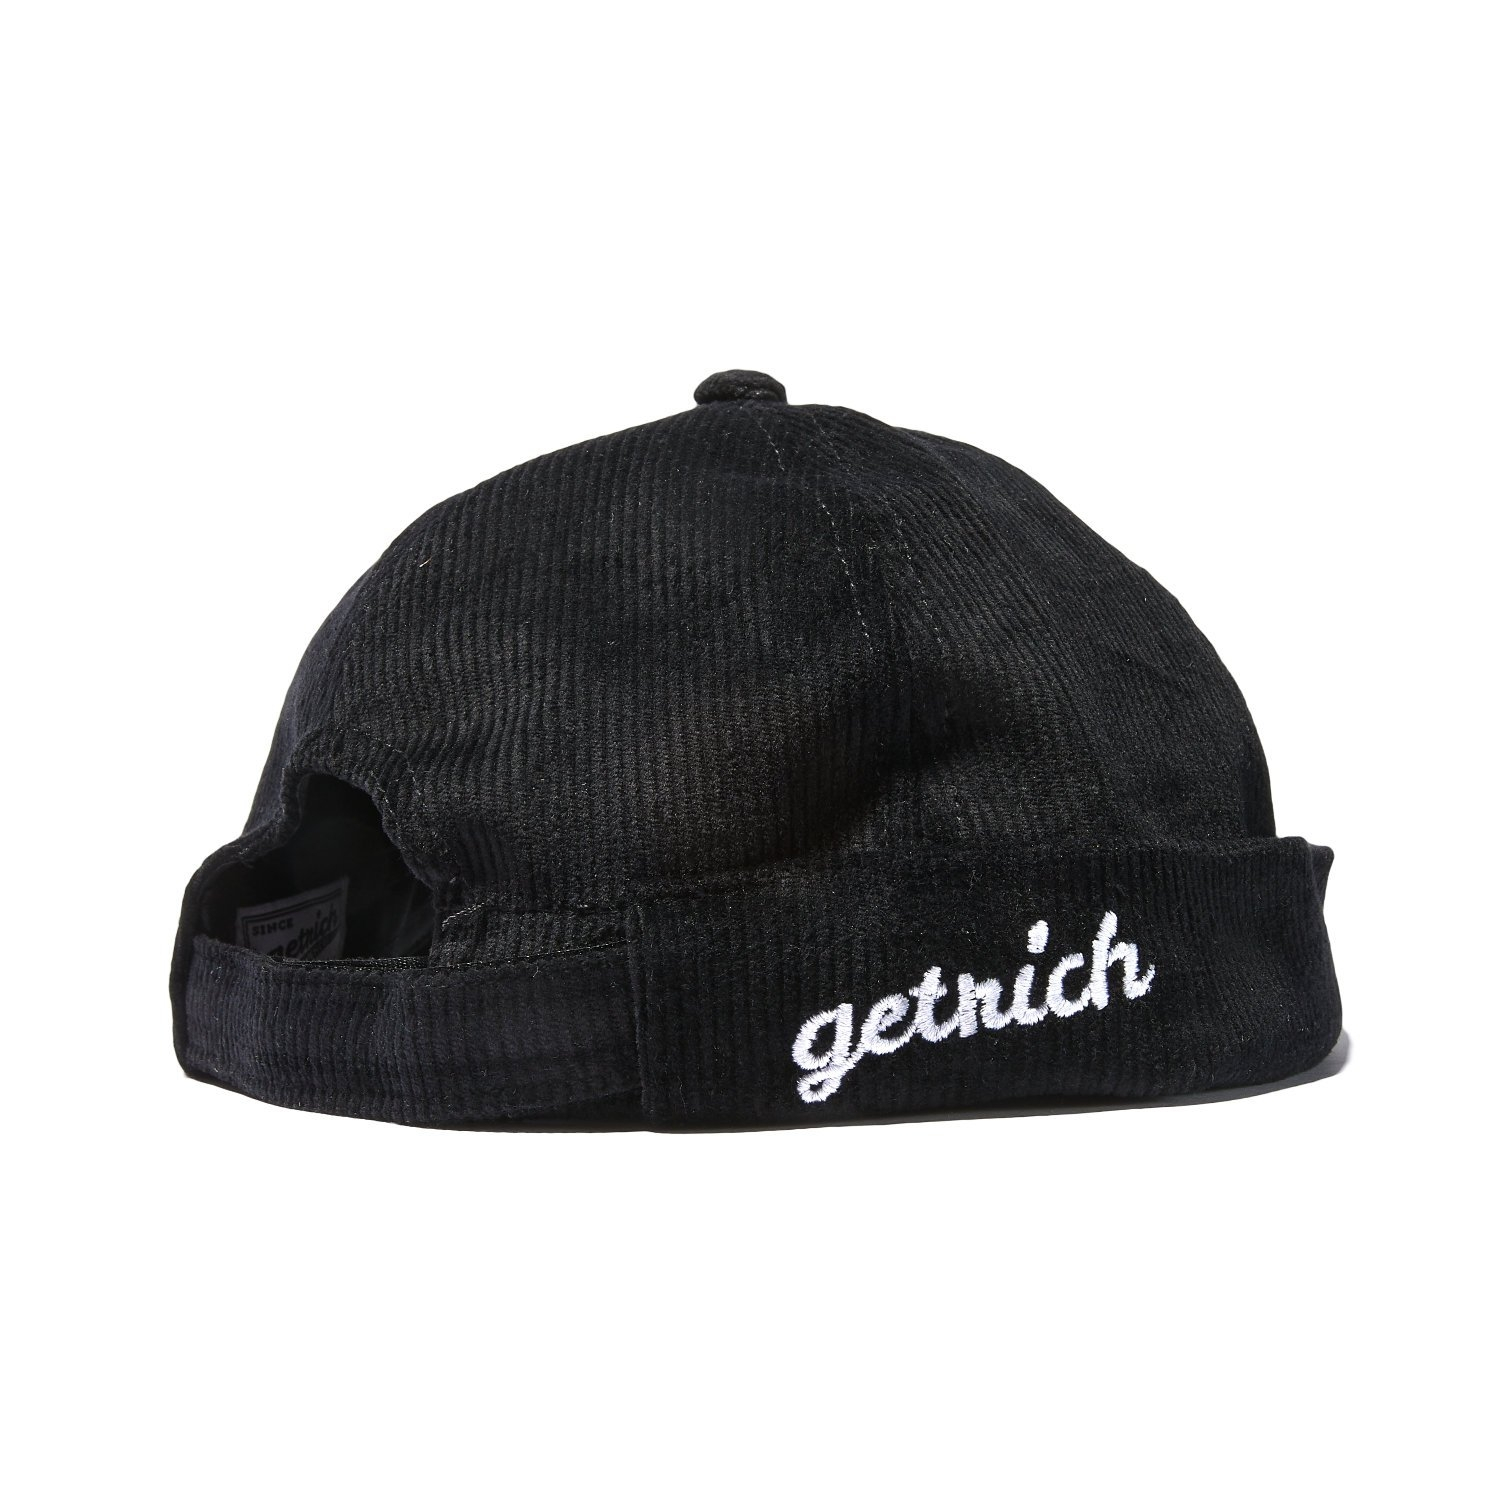 getricheasy™ Corduroy docker hat (Black)